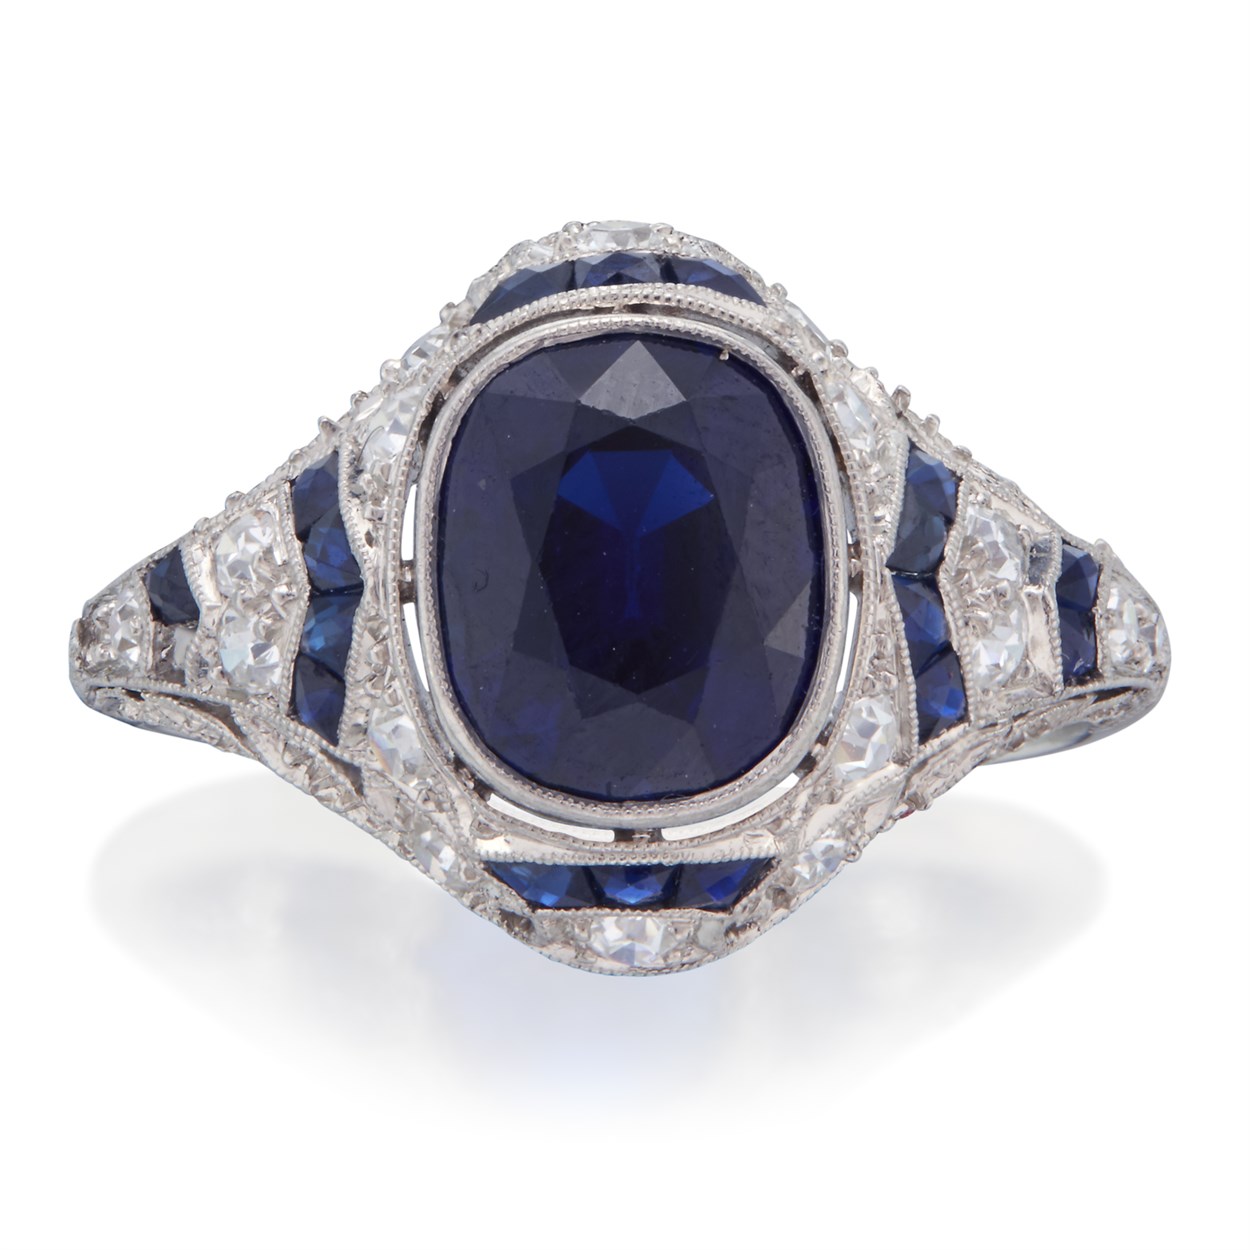 Lot 84 - An Art Deco diamond, sapphire, and platinum ring